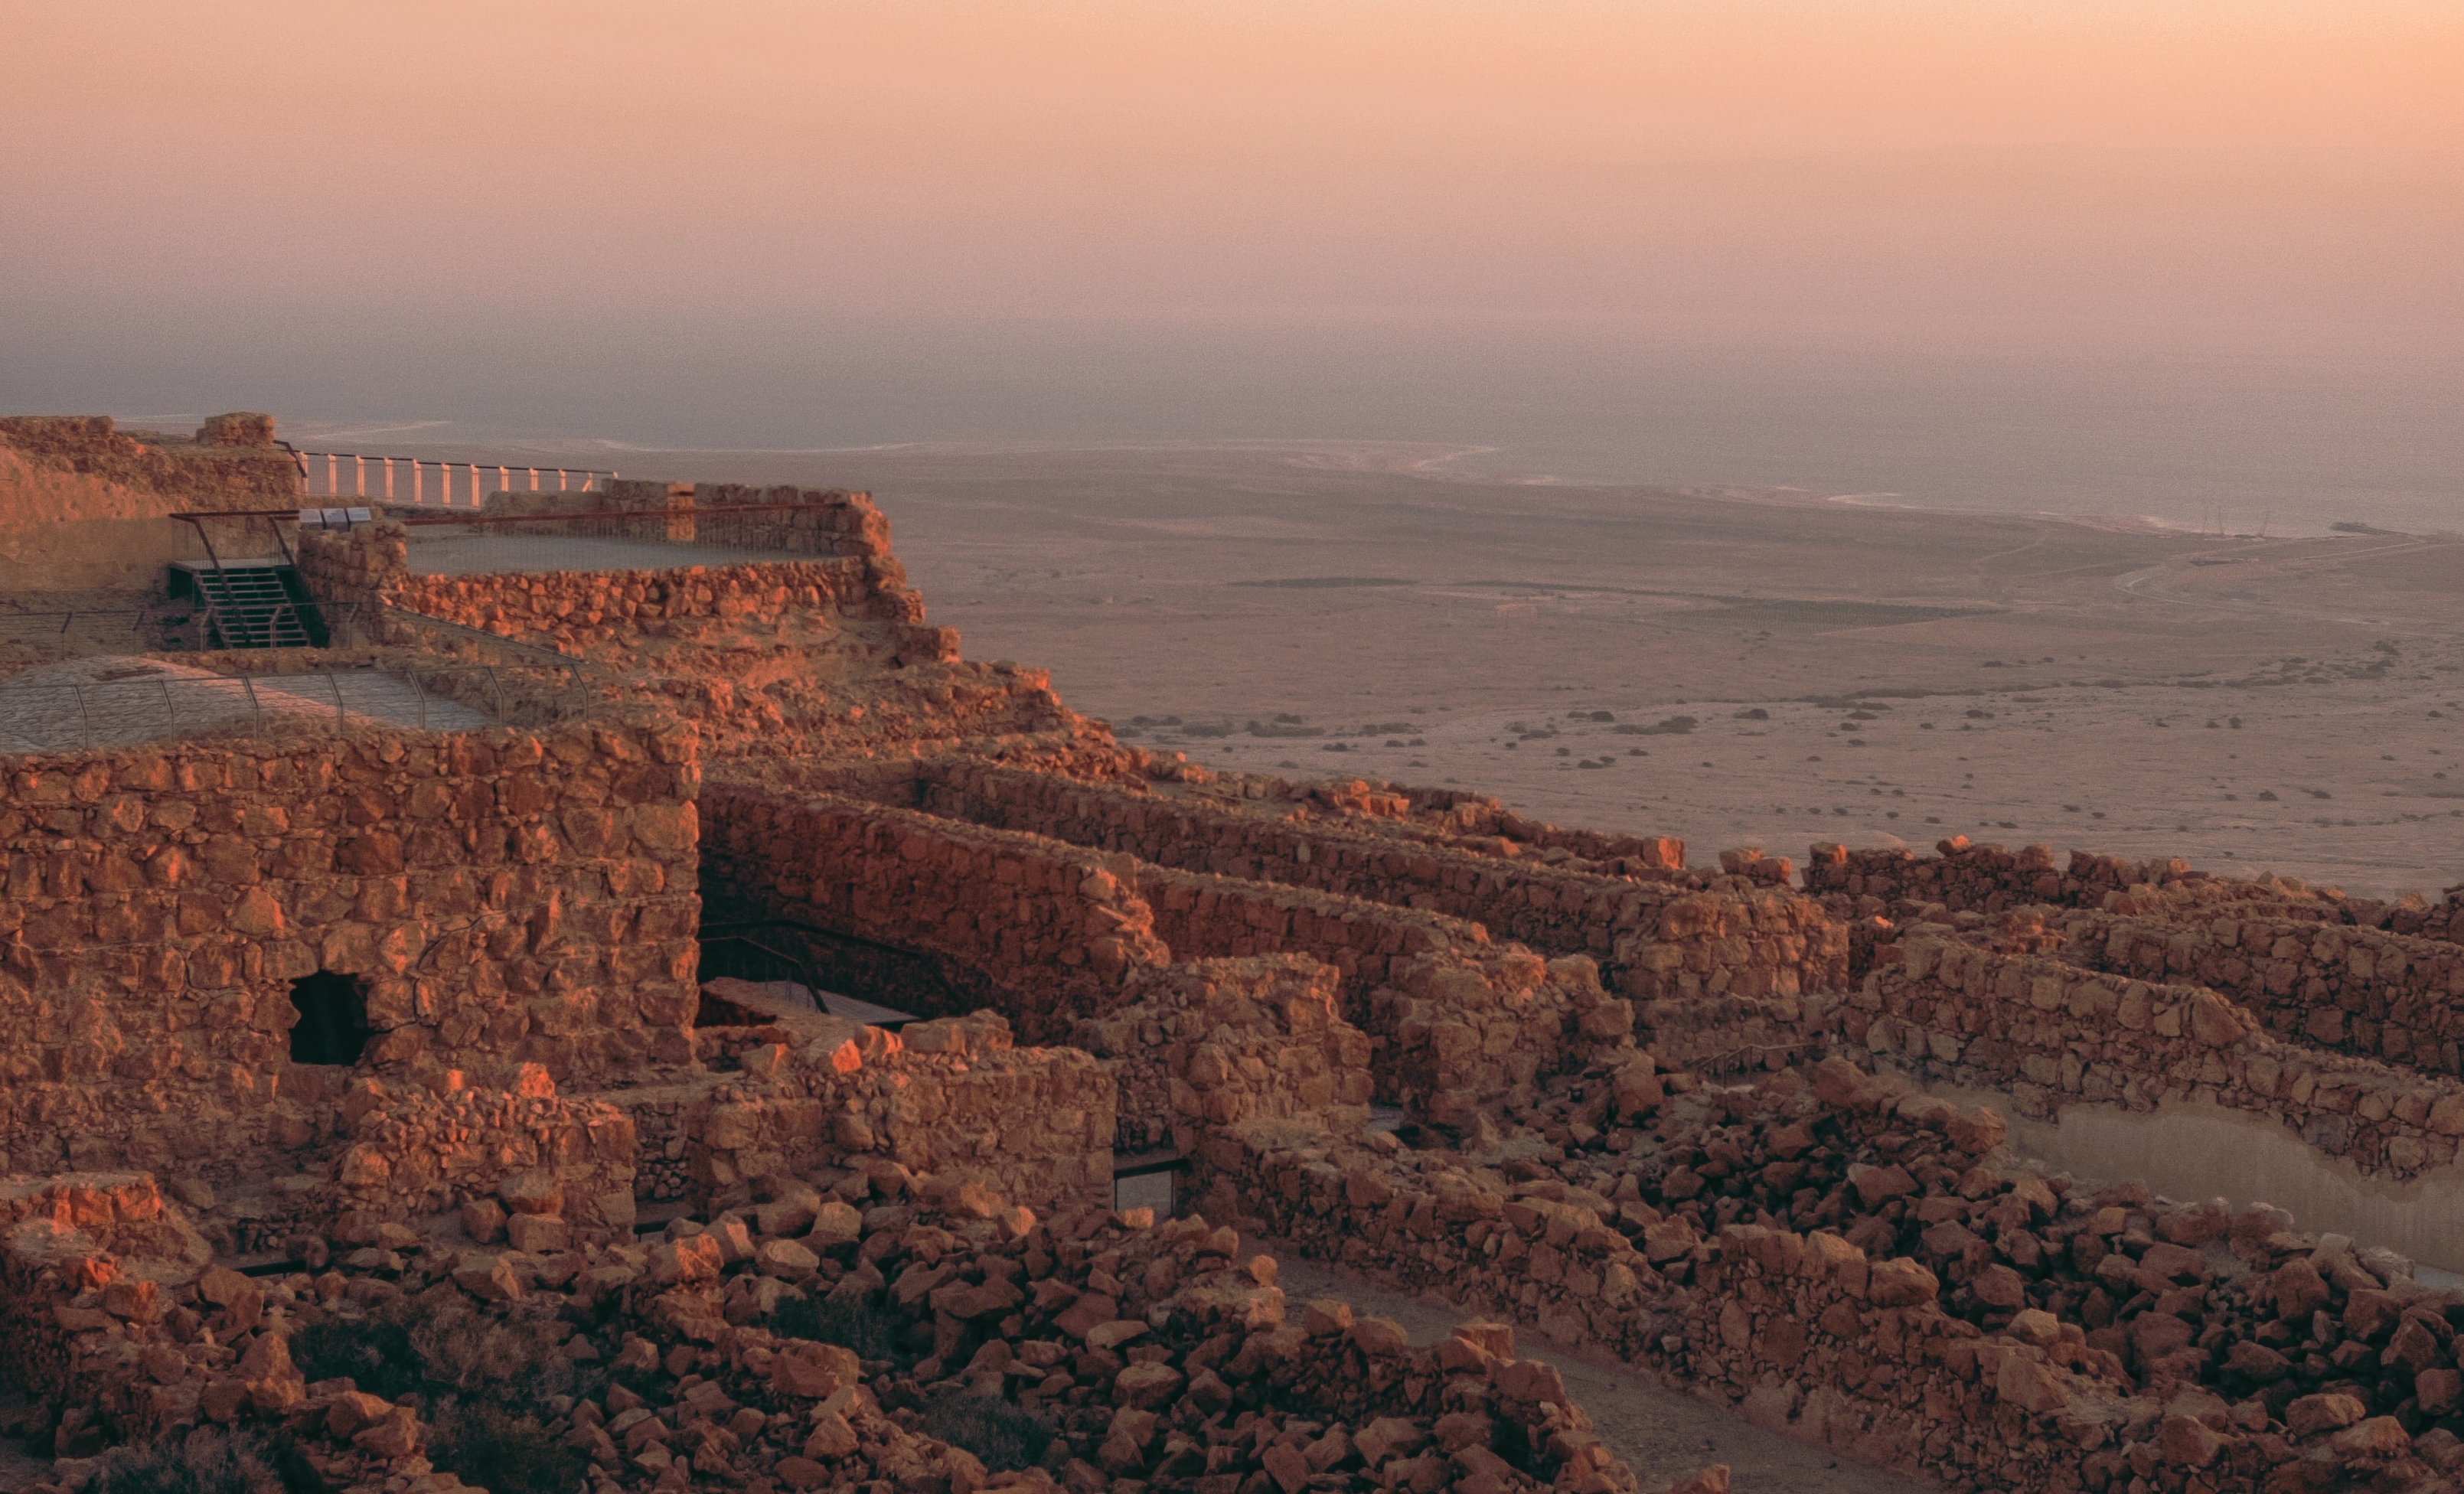 Indigenous Sun - image of Masada